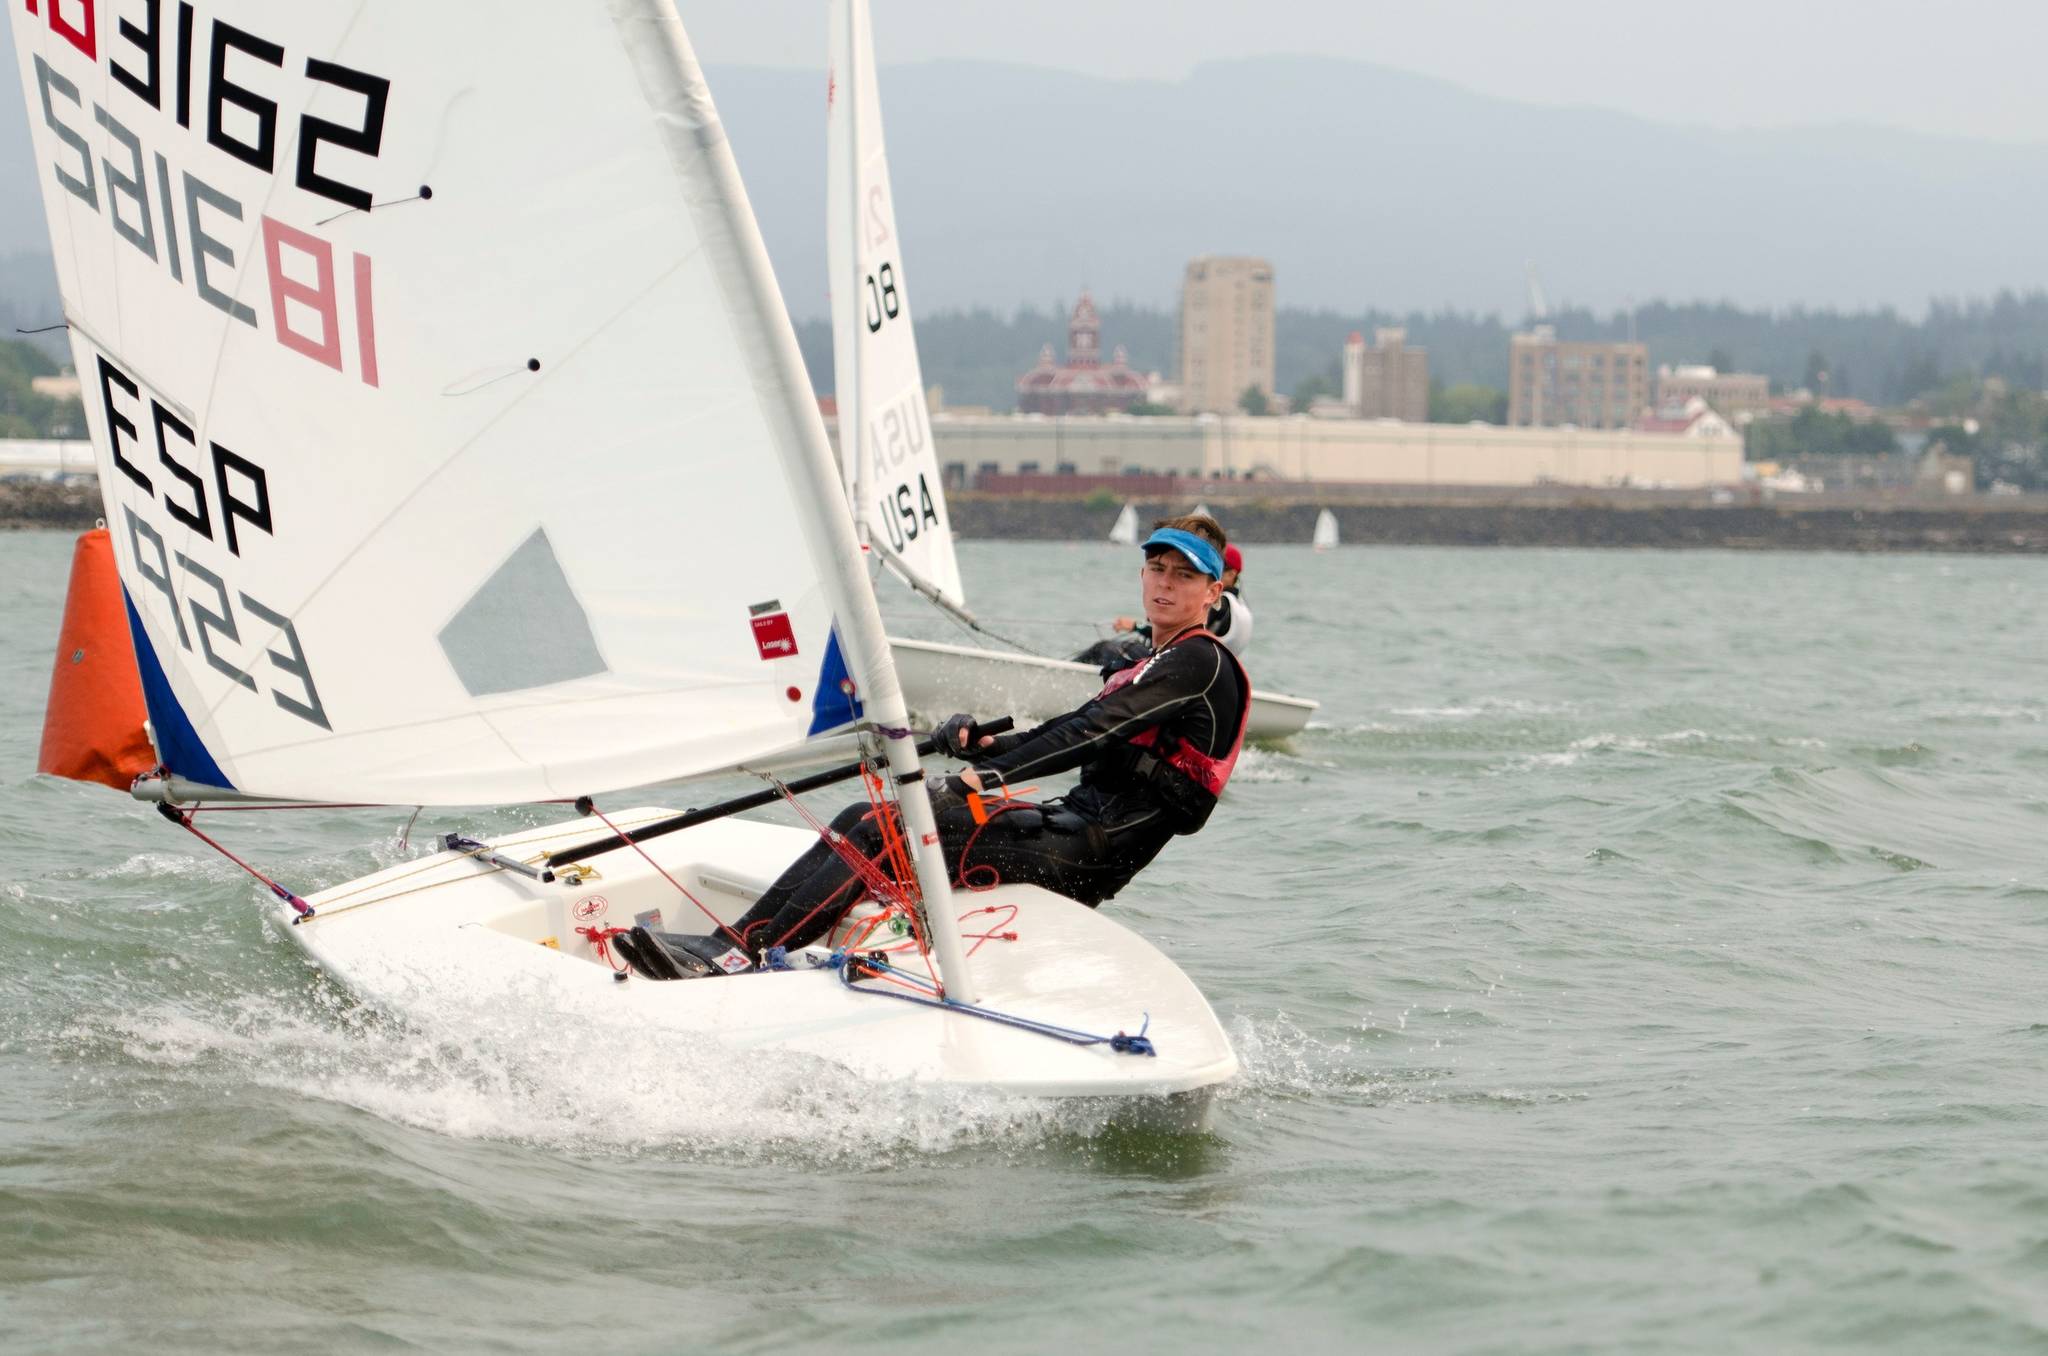 Perham Black wins sailing regatta